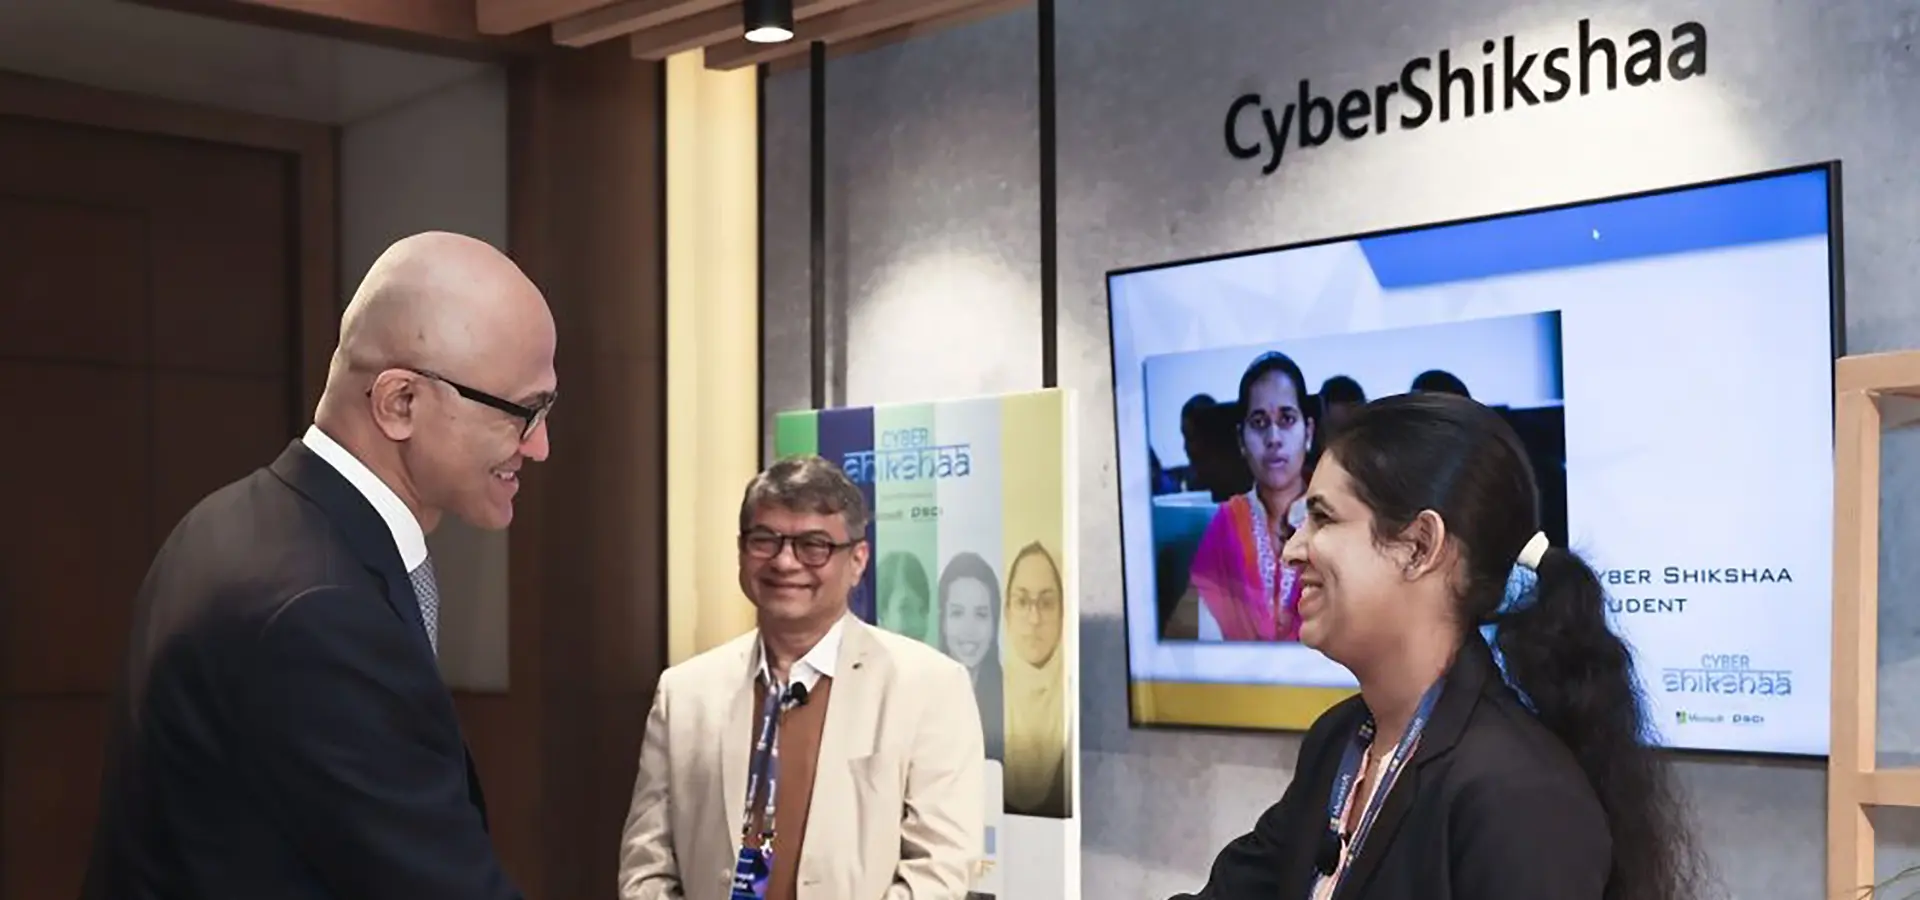 Mr Satya Nadella , Chairman and CEO, Microsoft interacting with CyberShikshaa Alumni